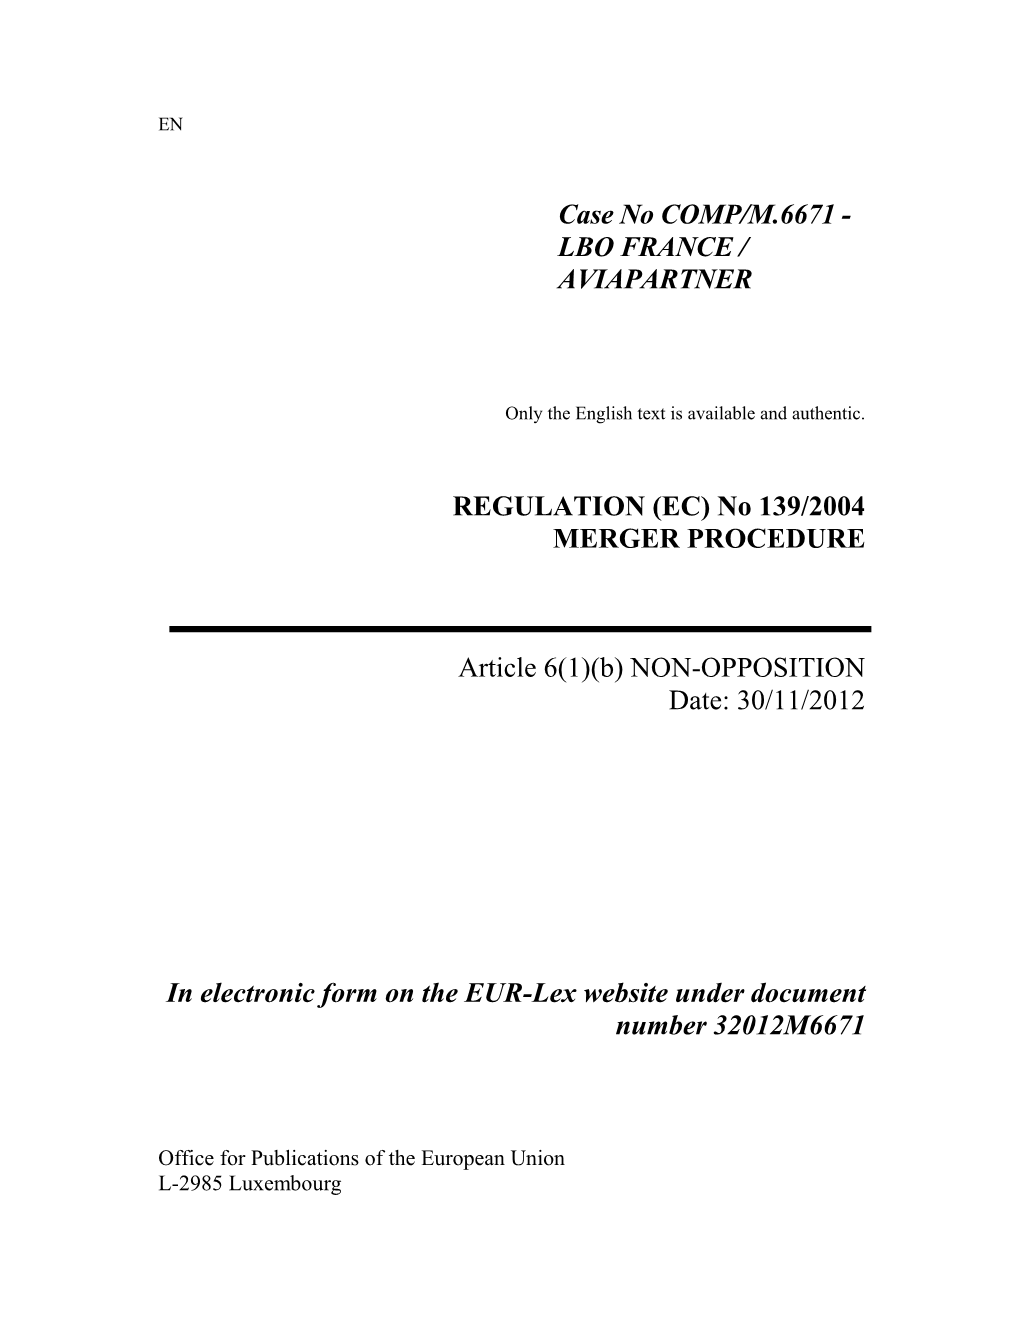 Case No COMP/M.6671 - LBO FRANCE / AVIAPARTNER